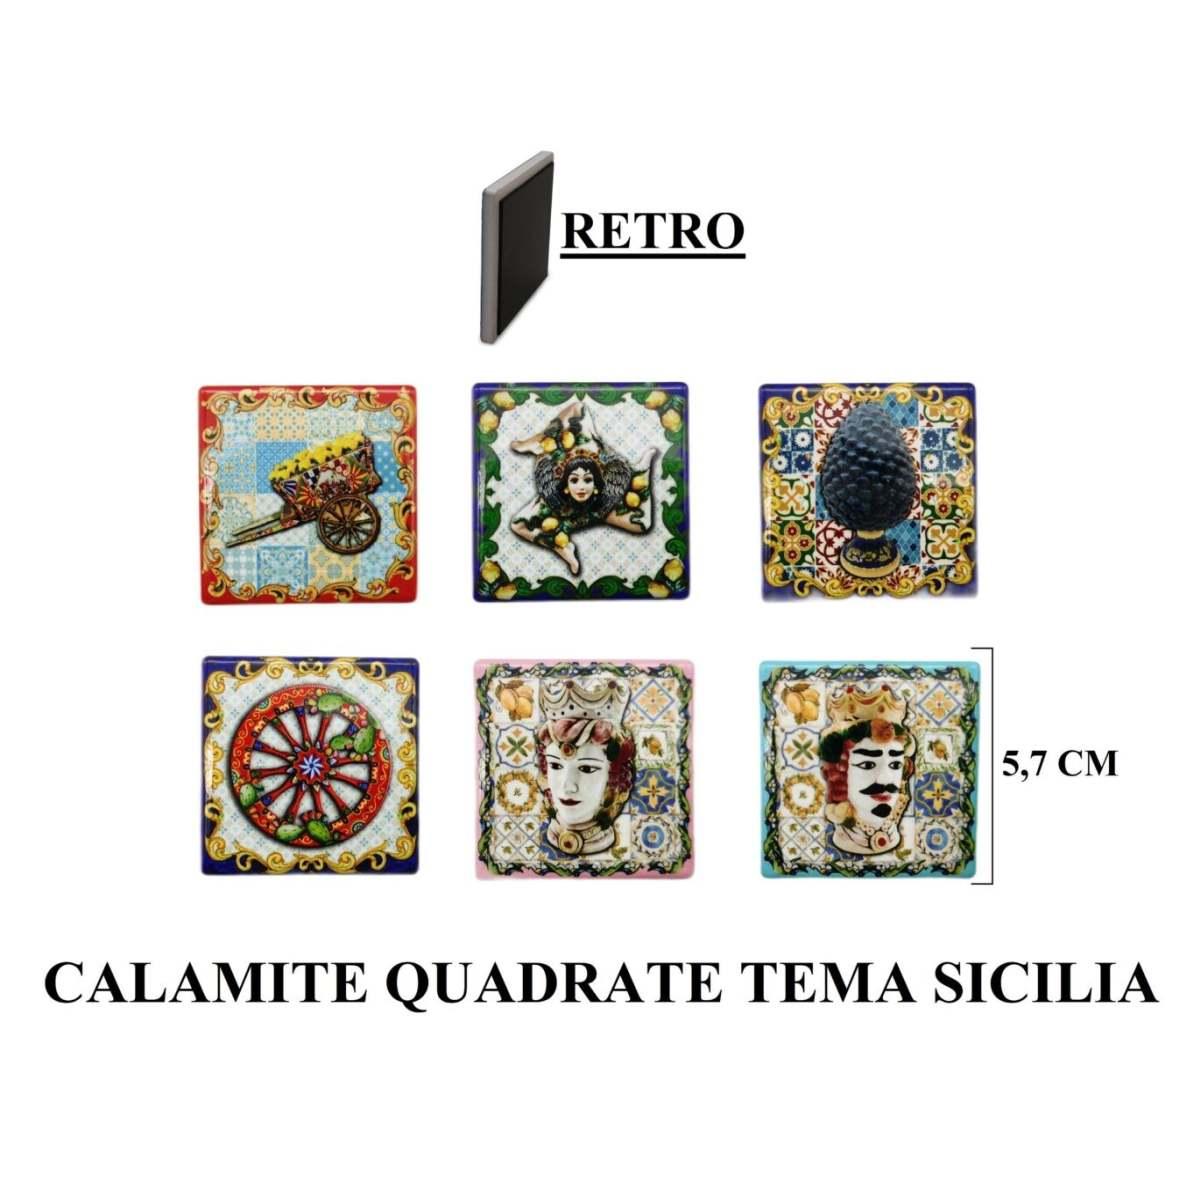 Calamite quadrate tema siciliano